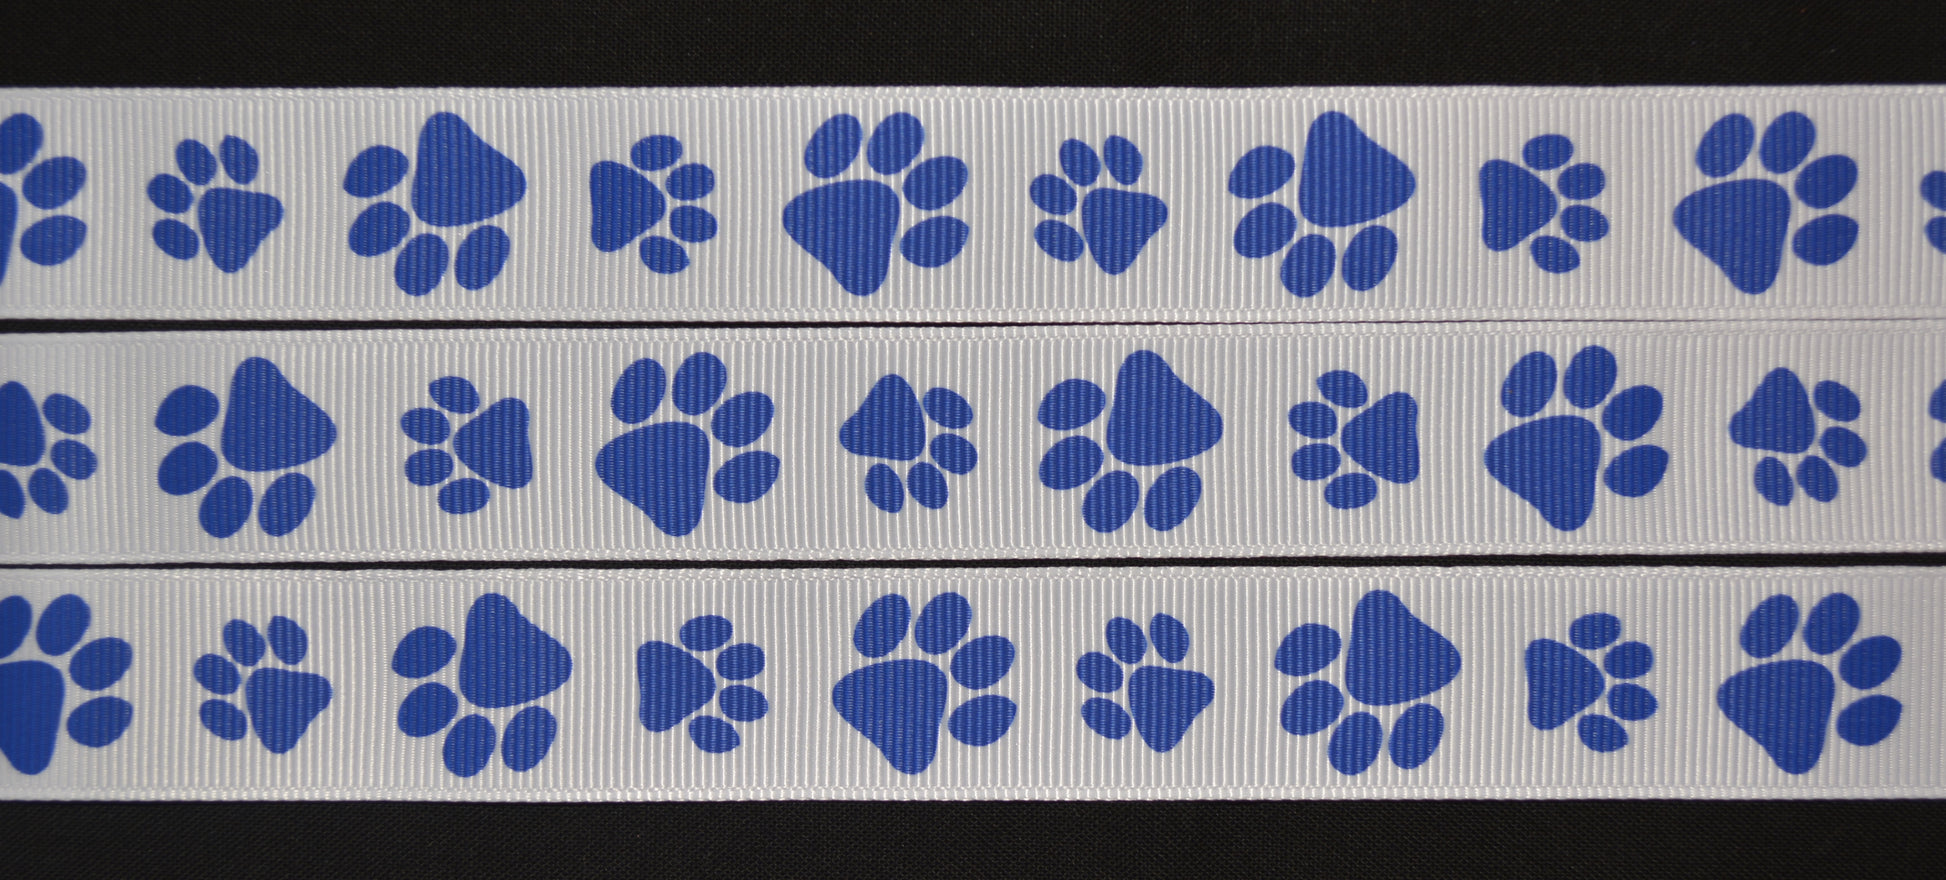 Paw Print Printed Grosgrain Ribbon, 7/8 inch